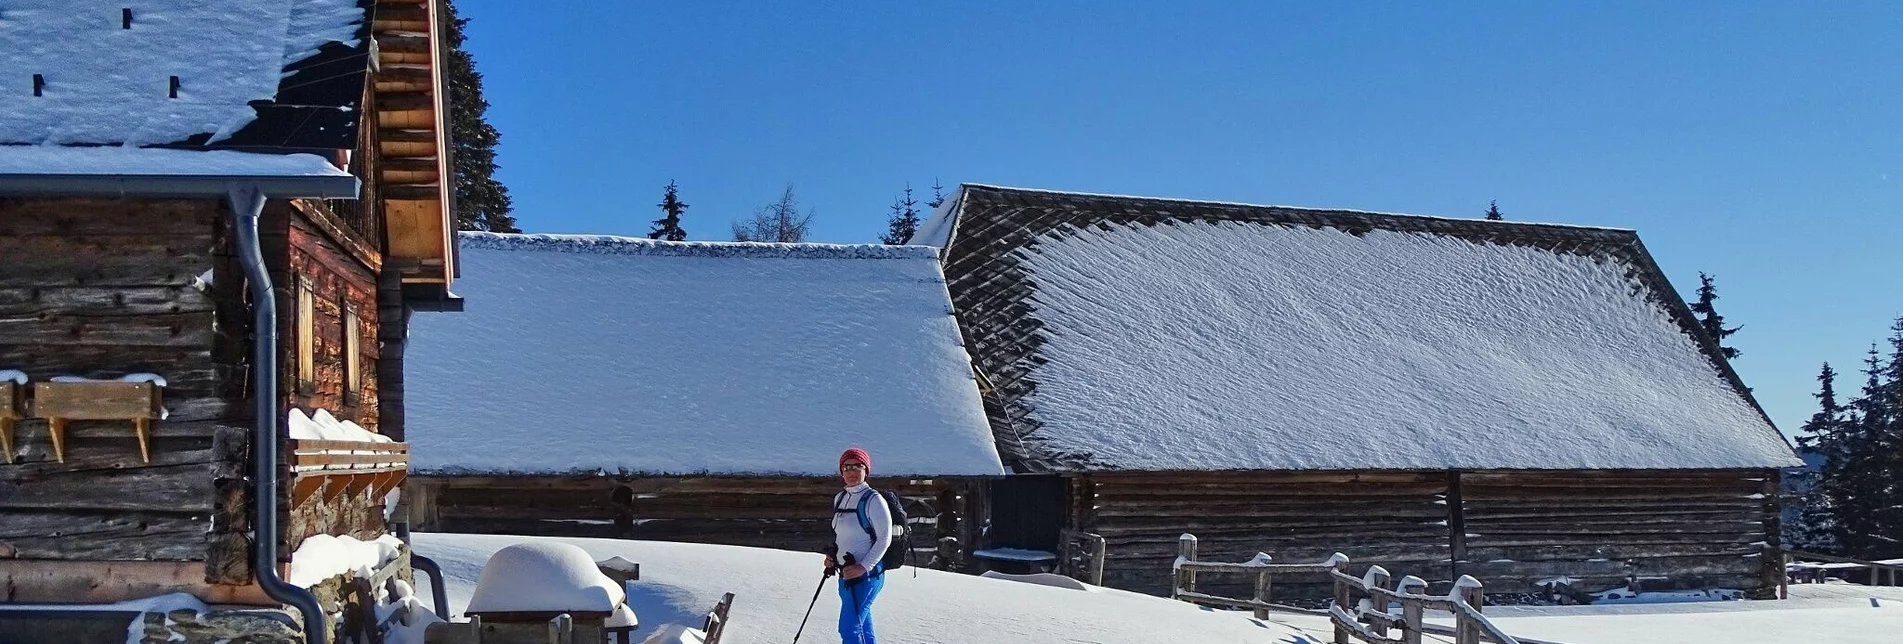 Schneeschuh Moar-in-Pichl-Hütte im Gleinalpengebiet - Touren-Impression #1 | © Weges OG